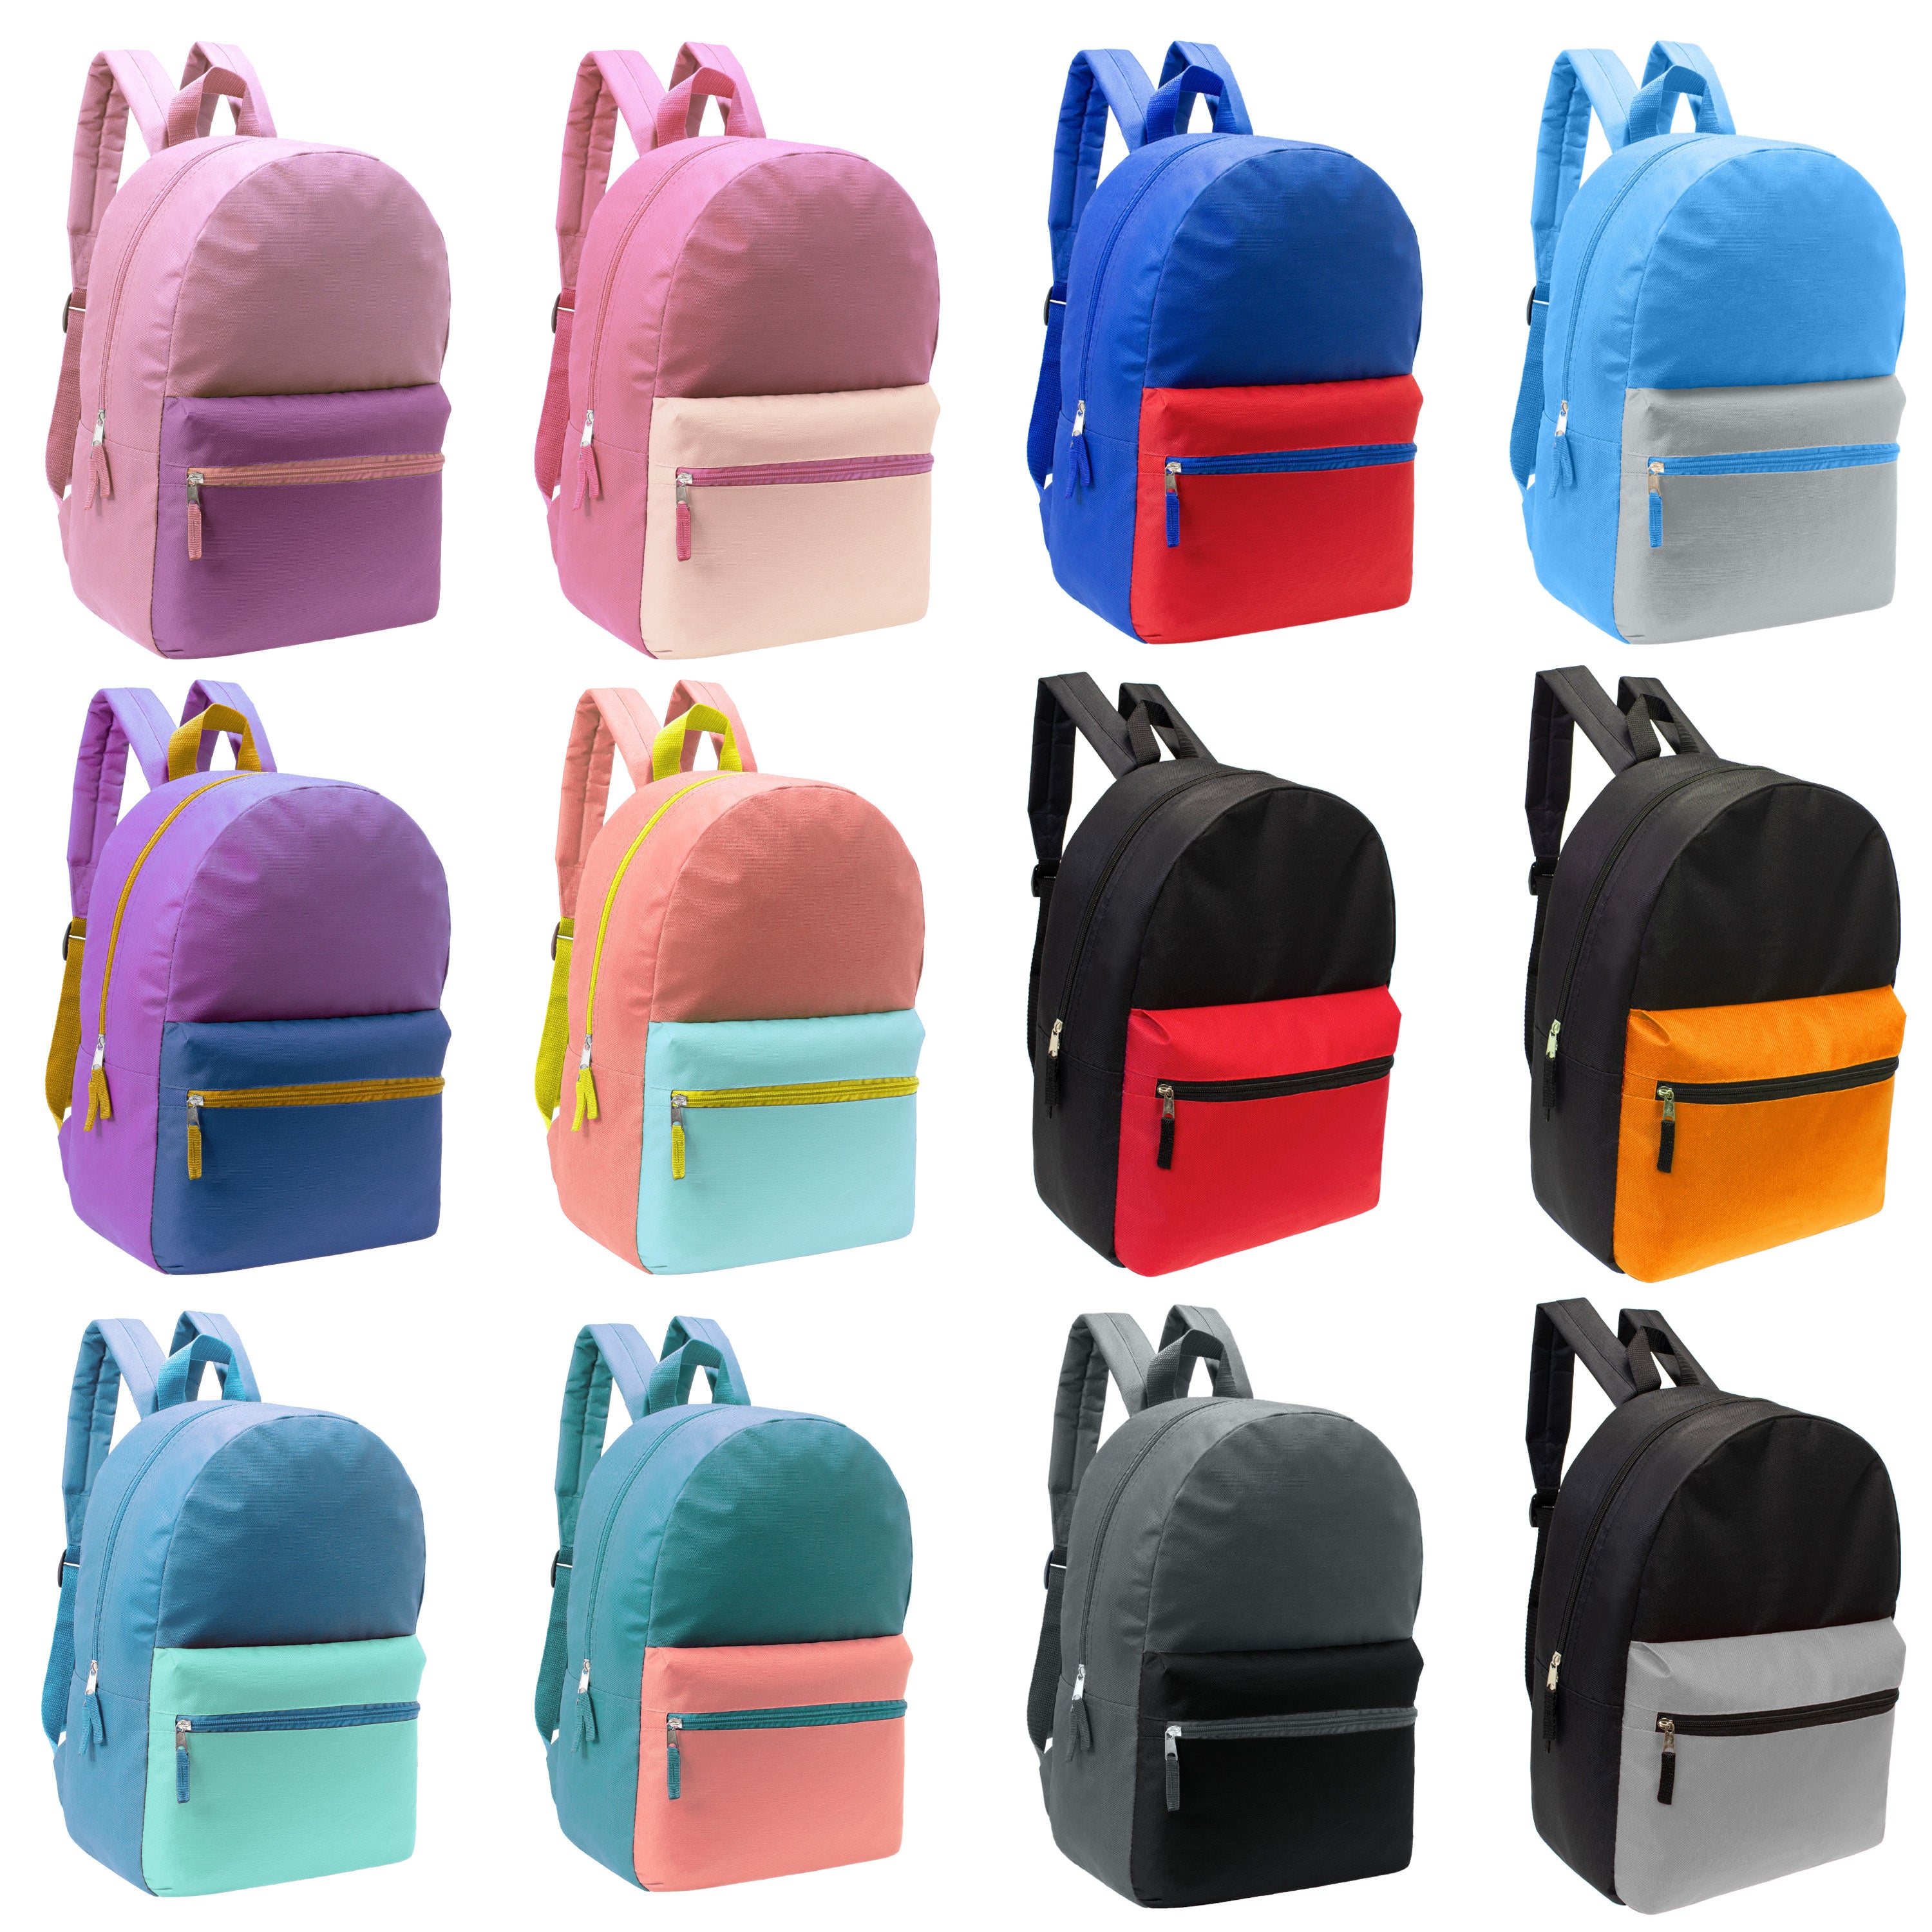 2 tone wholesale backpack in bulk SKU: BAPA-284-24